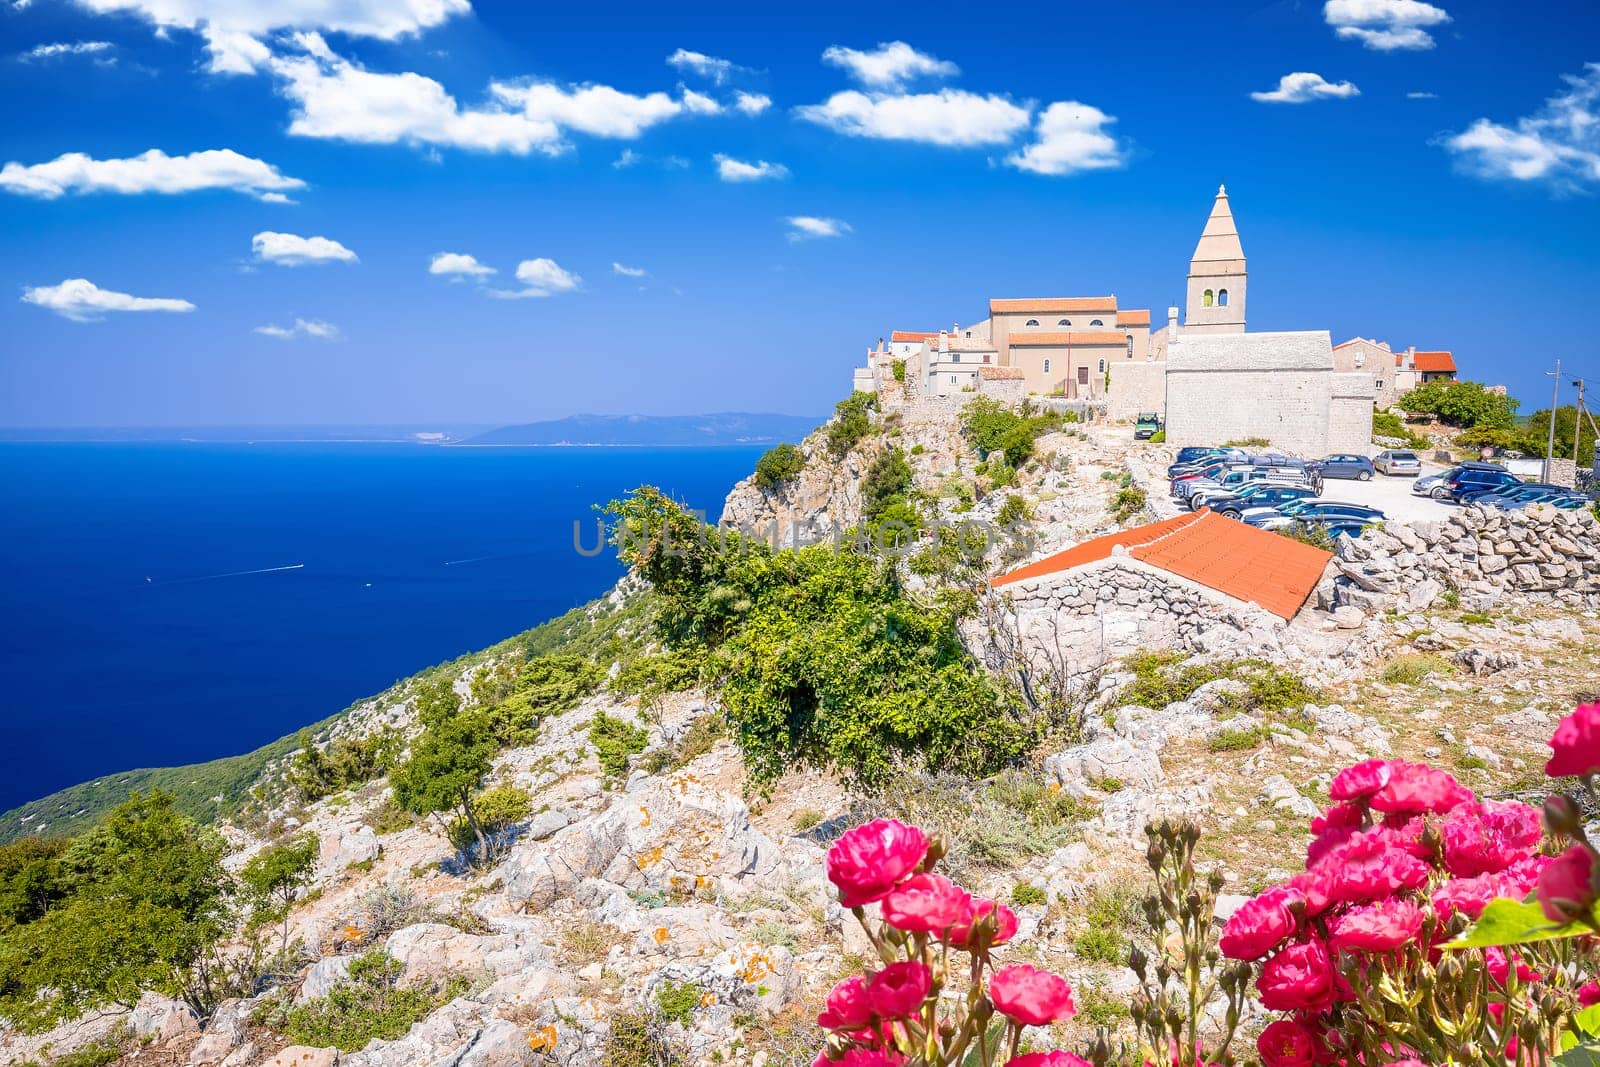 Adriatic coastal town of Lubenice on the rock, Island of Cres, archipelago of Croatia